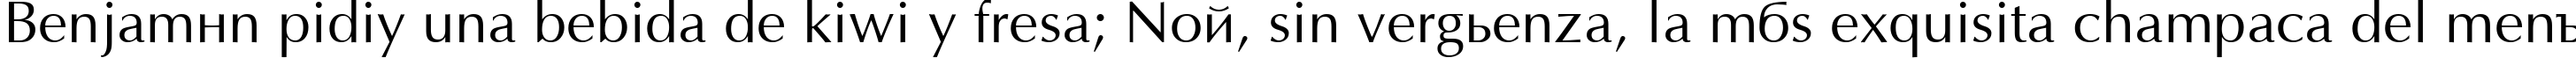 Пример написания шрифтом Optima текста на испанском